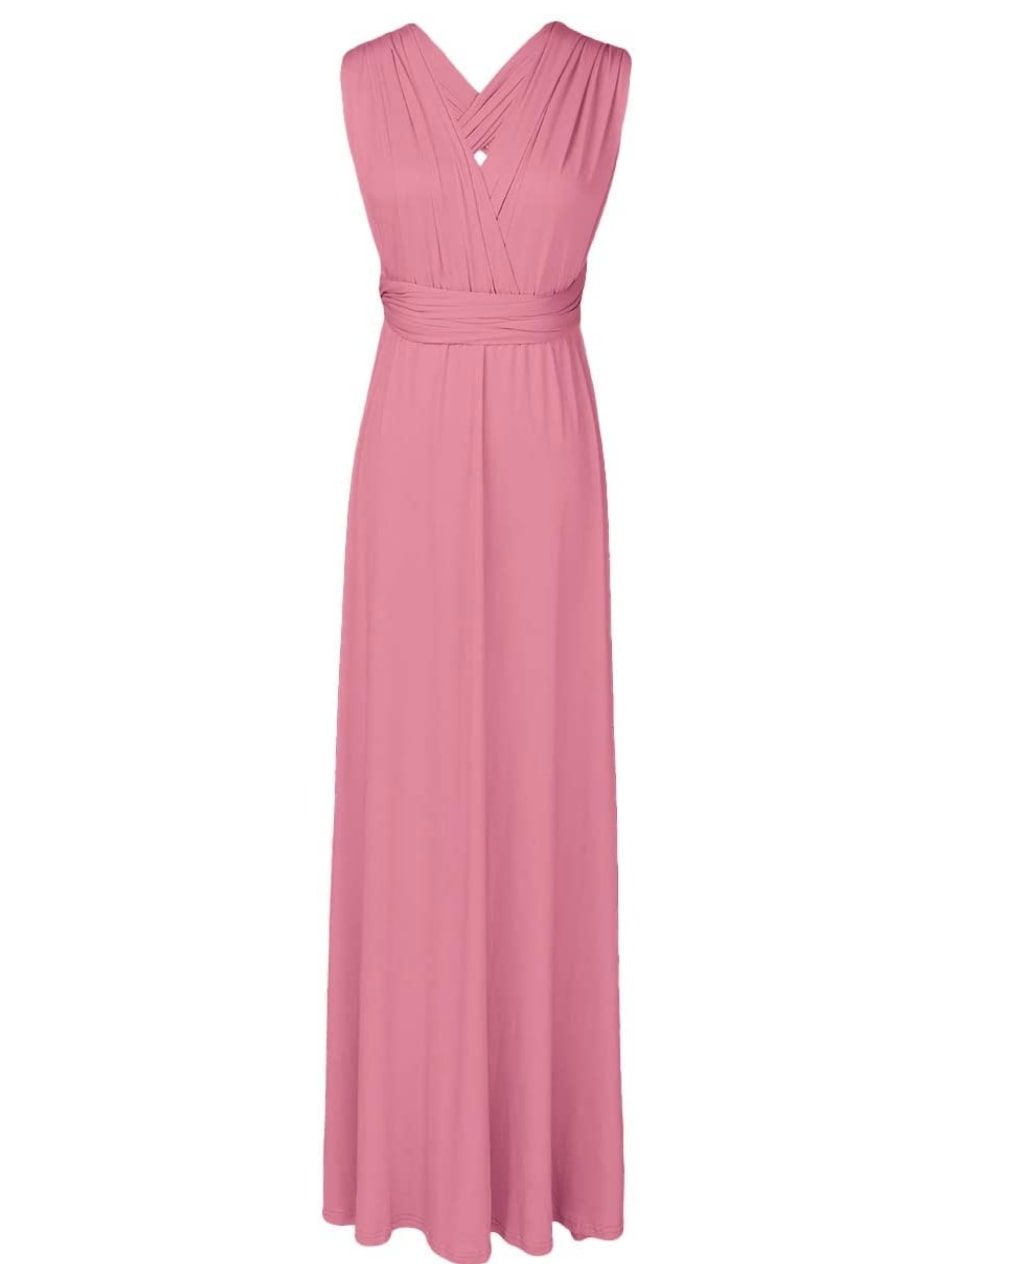 Style B073CGBPLG IWEMEK Size 8 Bridesmaid Pink Floor Length Maxi on Queenly